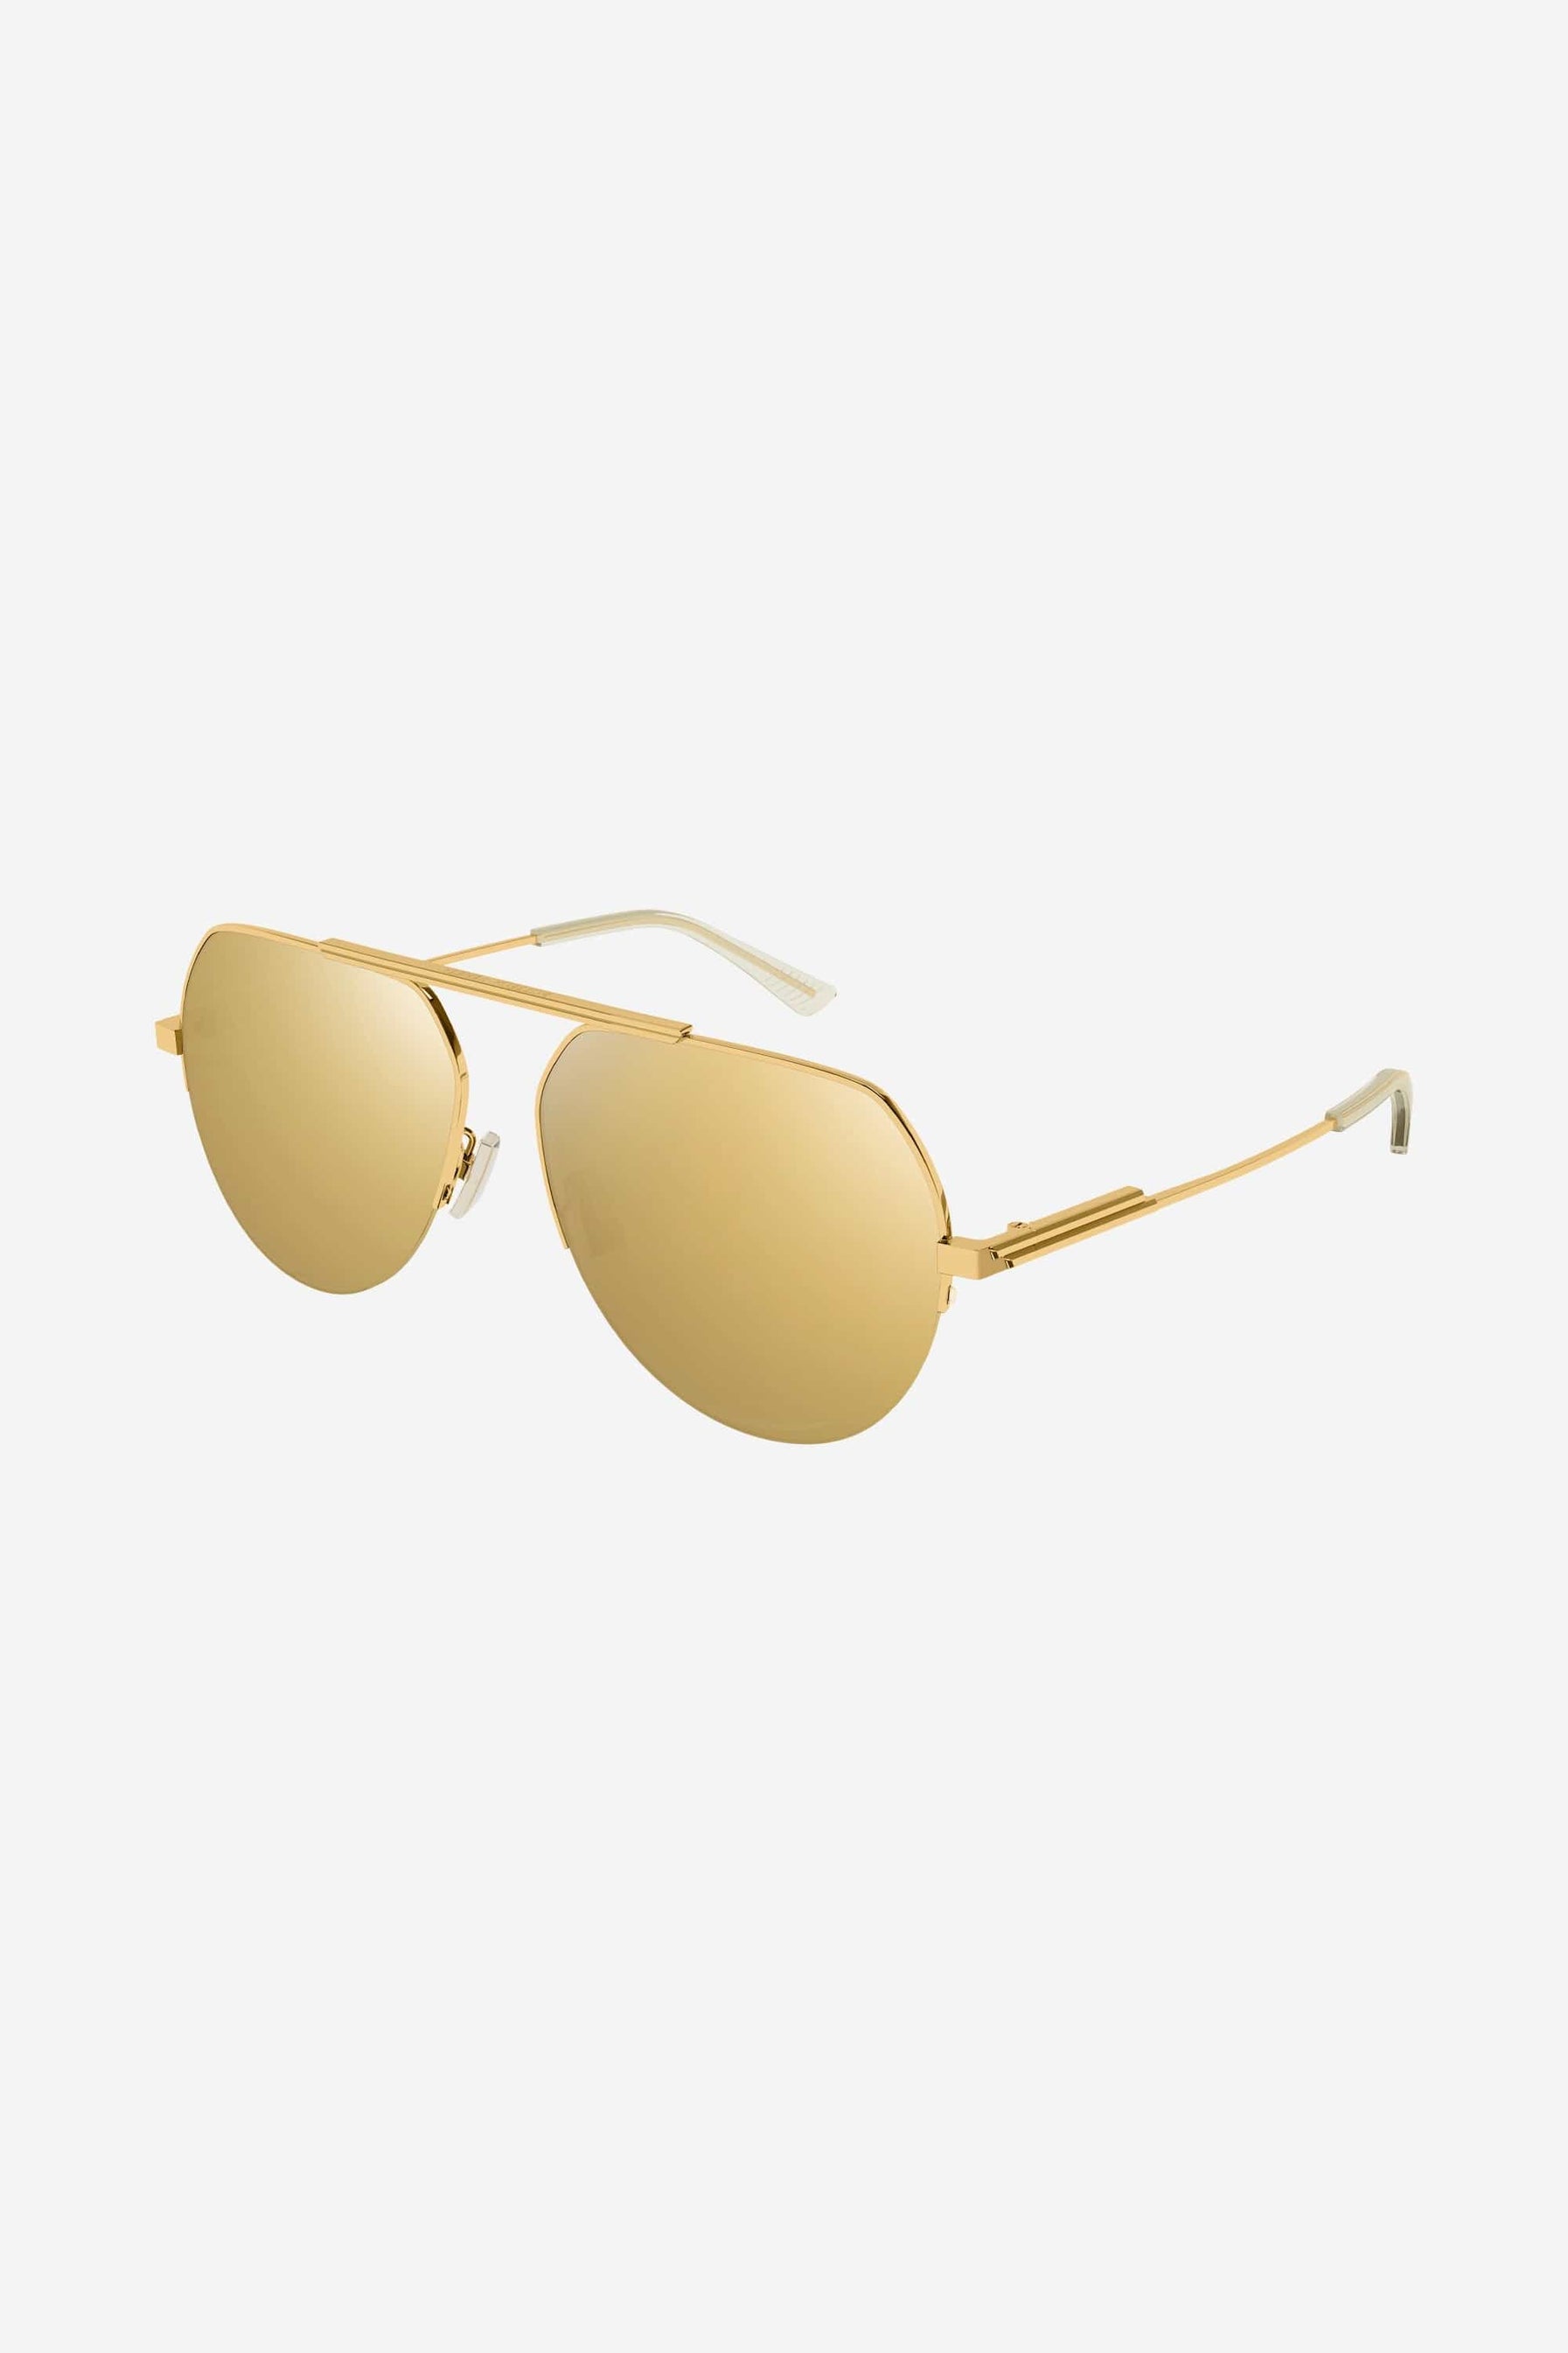 Bottega Veneta gold pilot style sunglasses - Eyewear Club